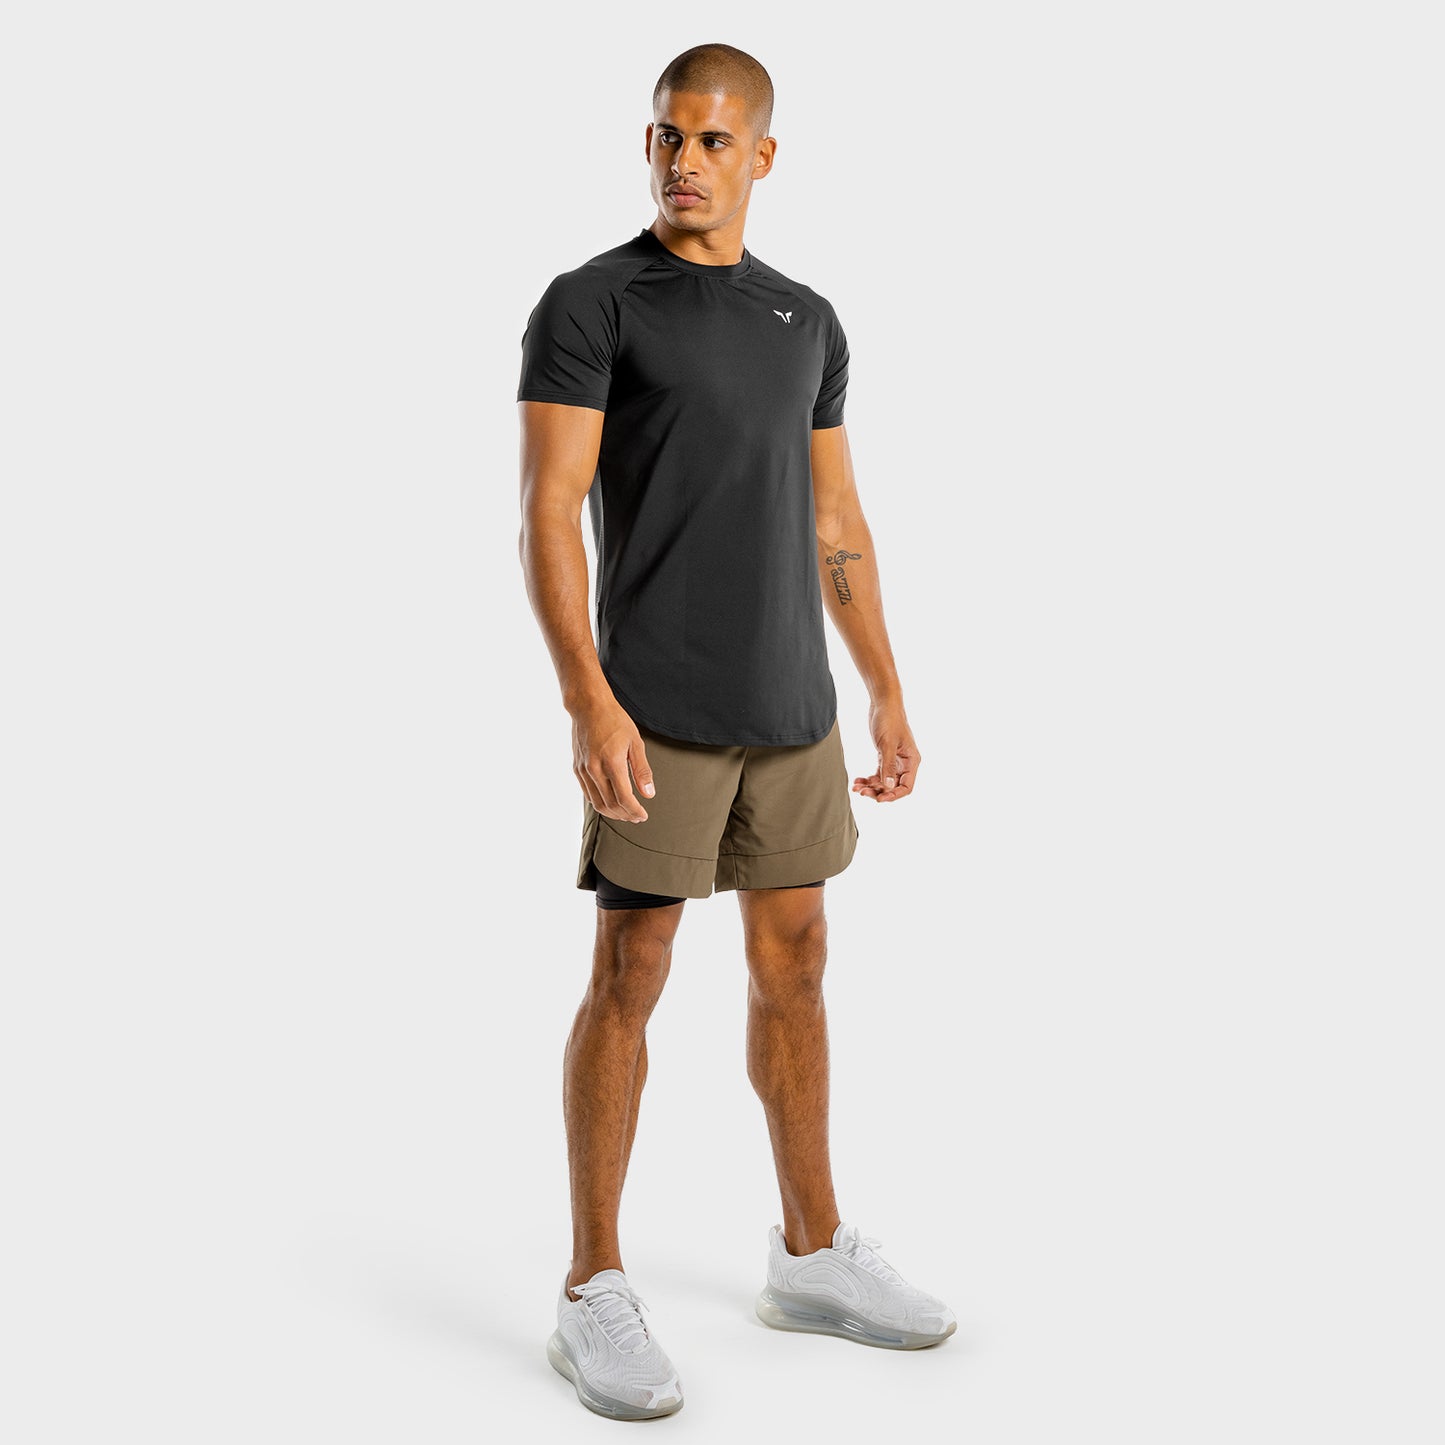 squatwolf-gym-wear-limitless-razor-tee-black-workout-shirts-for-men